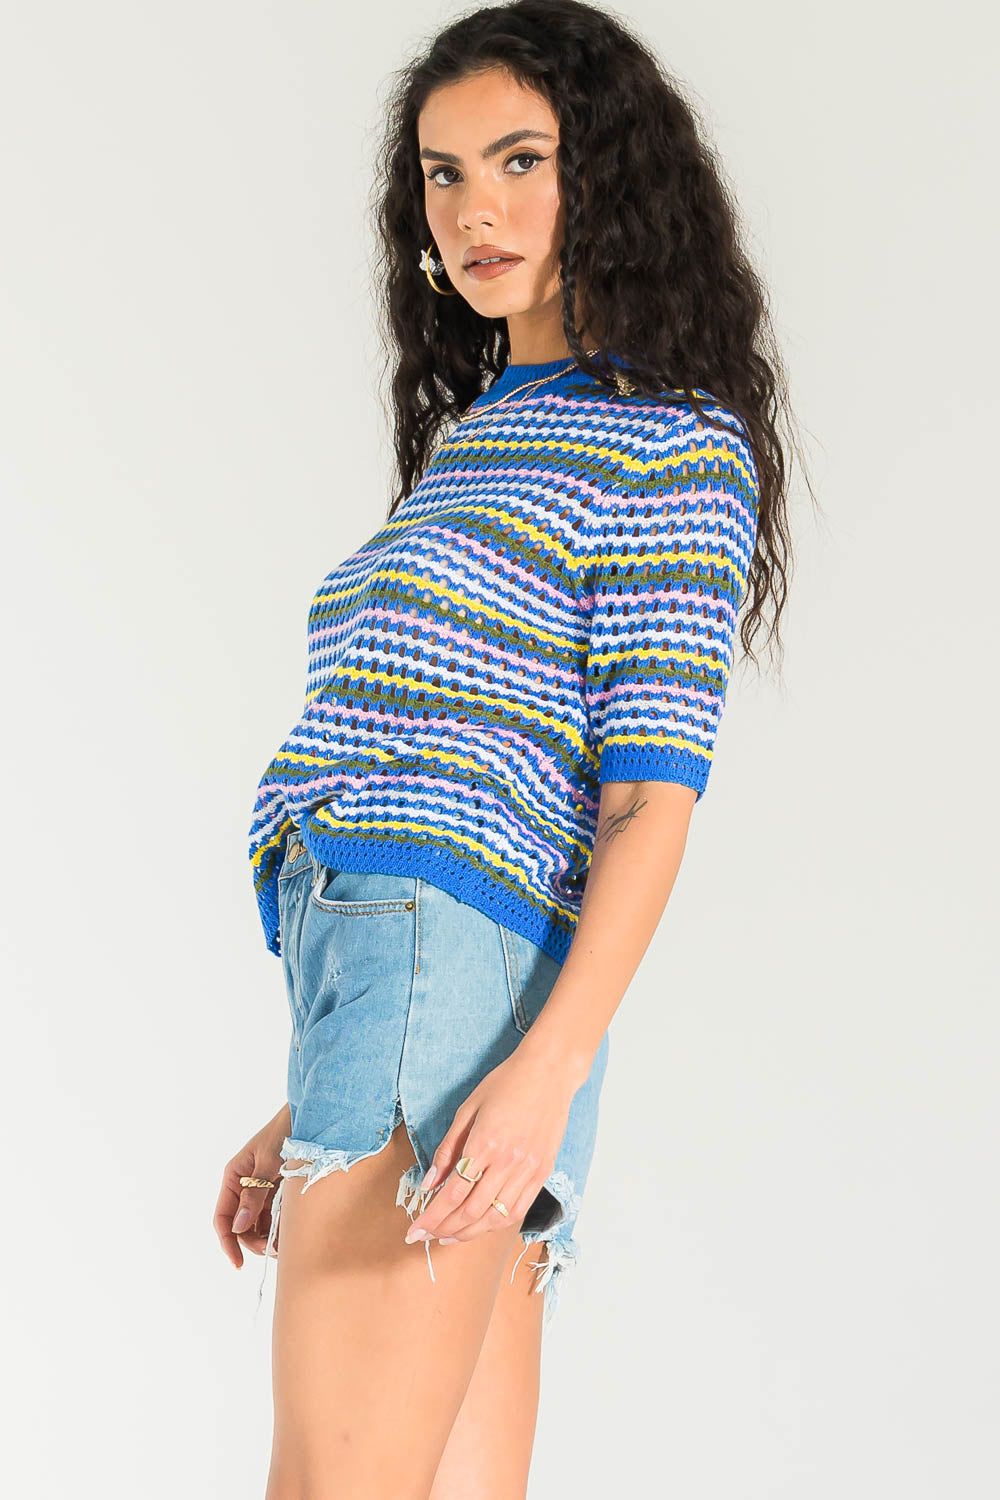 Ellen Blue Multi Color Short Sleeve Crochet Top